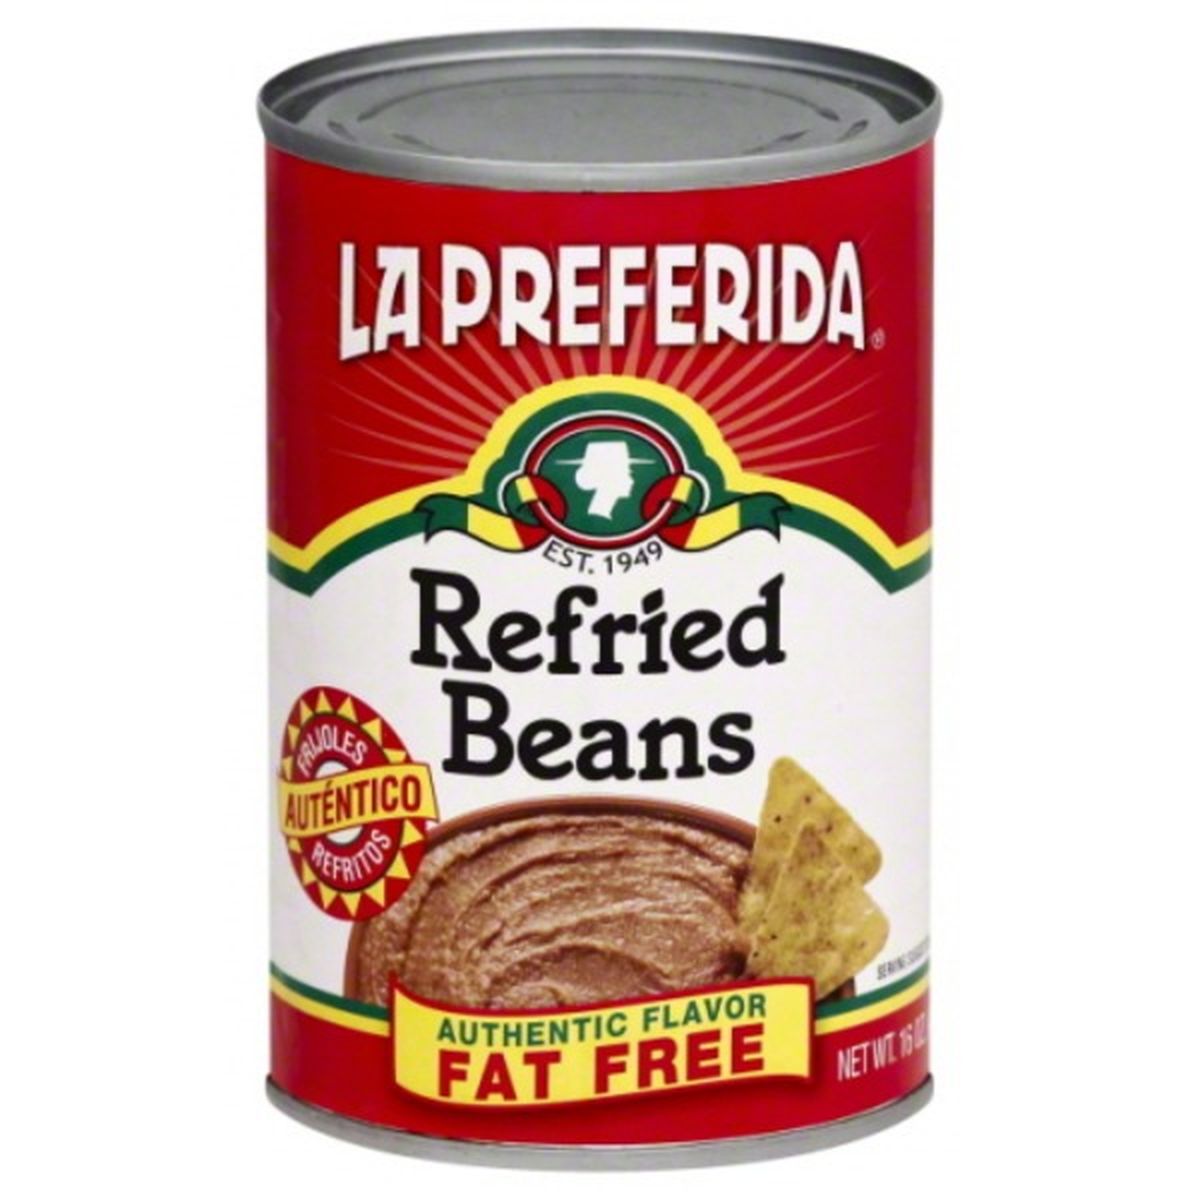 Calories in La Preferida Refried Beans